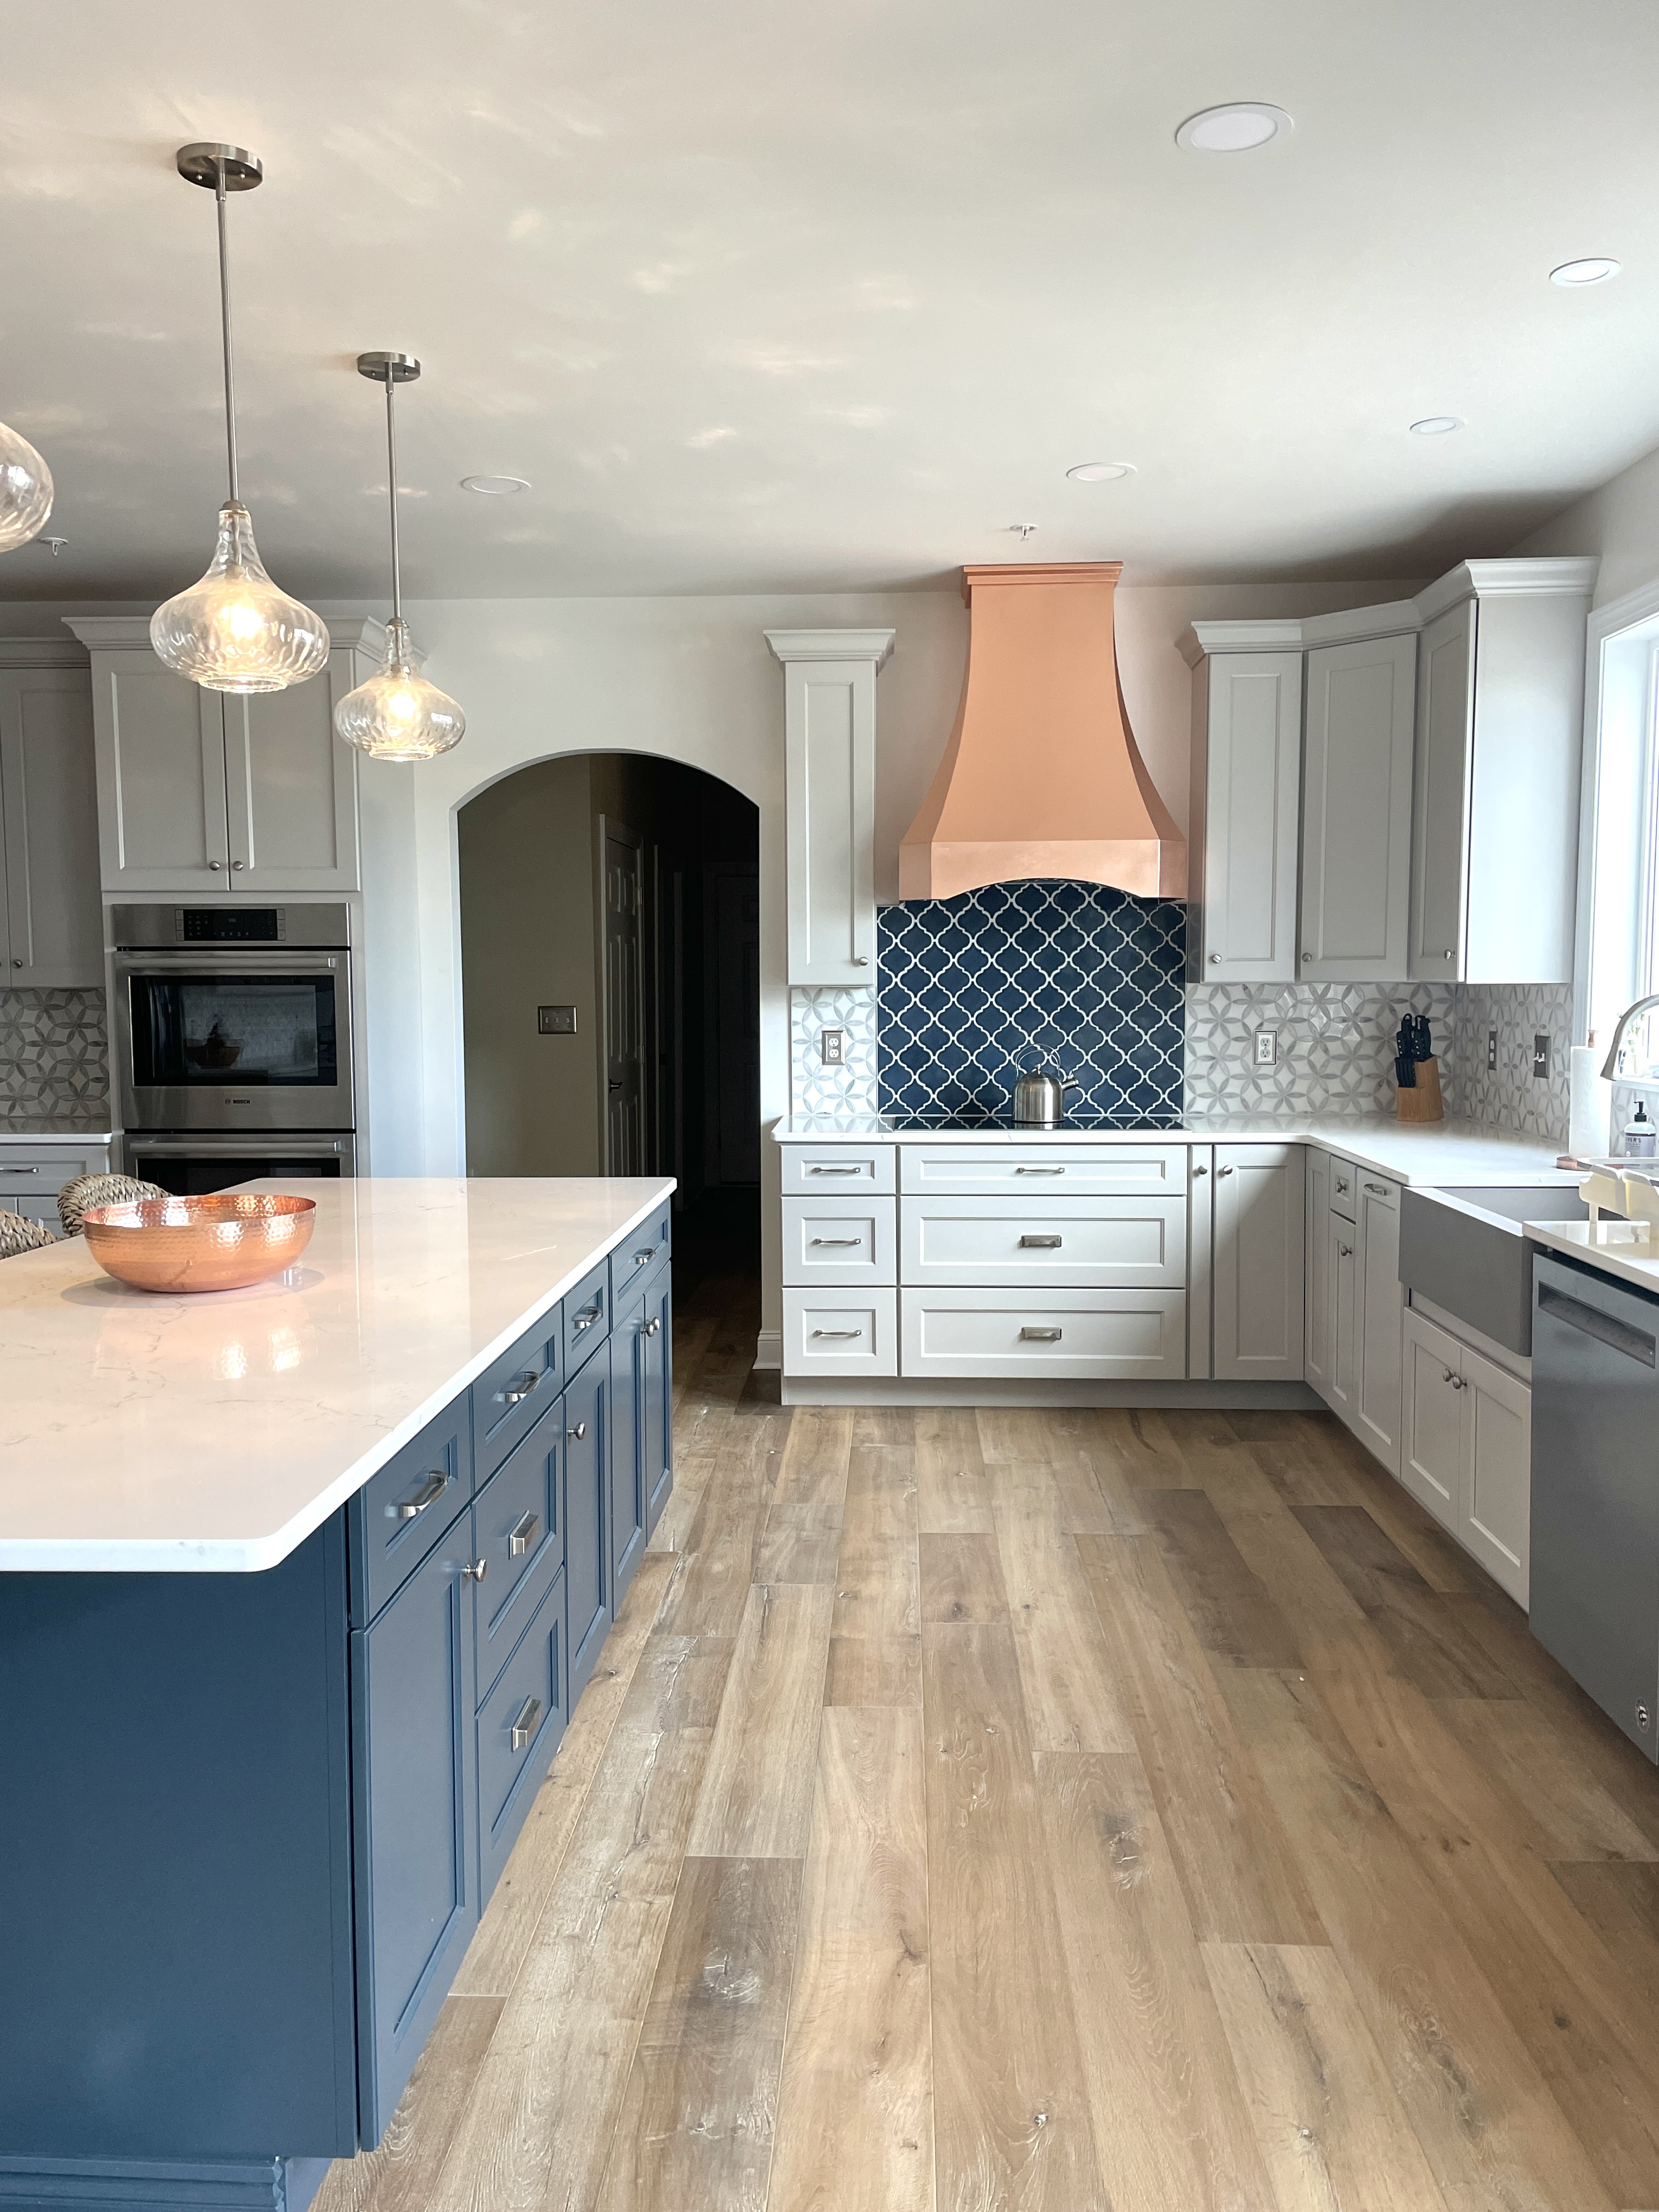 Featuring french inspired elements range hood options, kitchen design idea, white kitchen cabinets, white kitchen countertops, luxurious marble backsplash